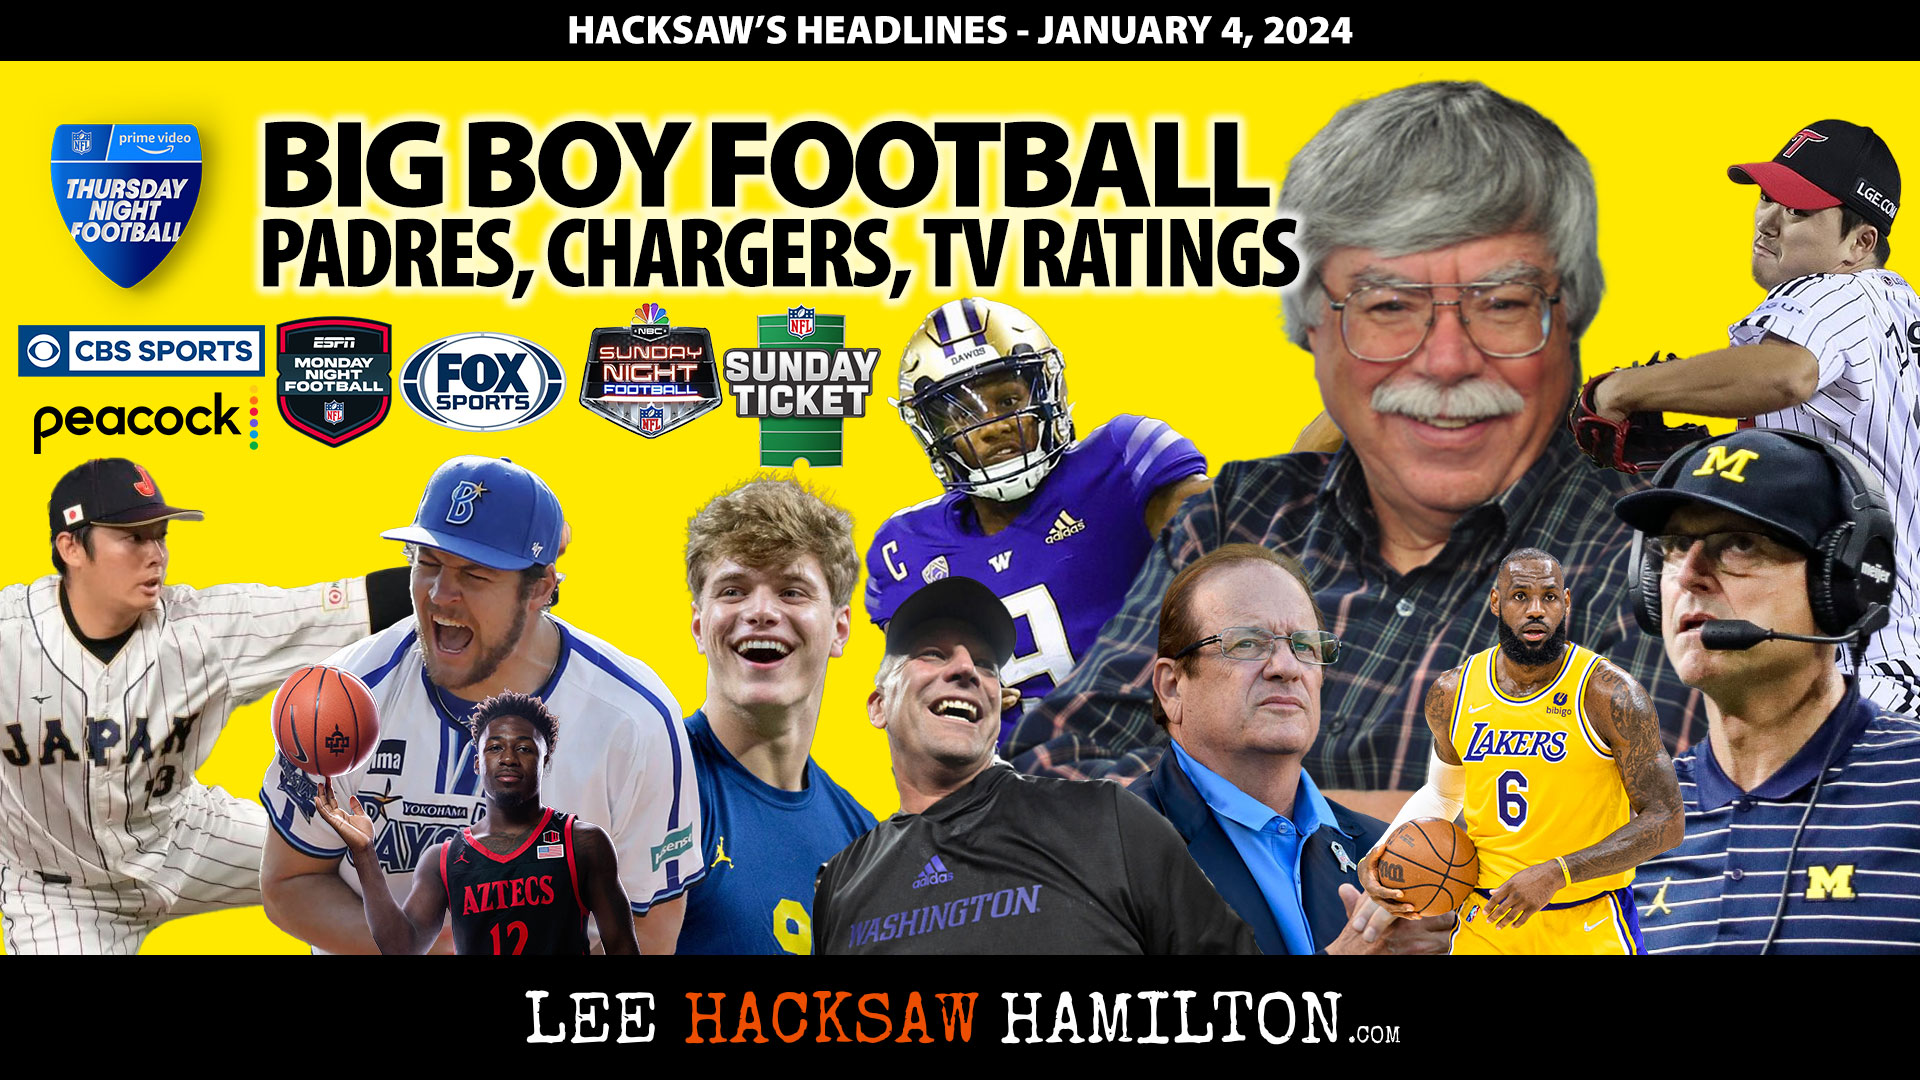 Lee Hacksaw Hamilton discusses Michigan vs Washington, TV Ratings, Chargers, Padres, Fans Forum